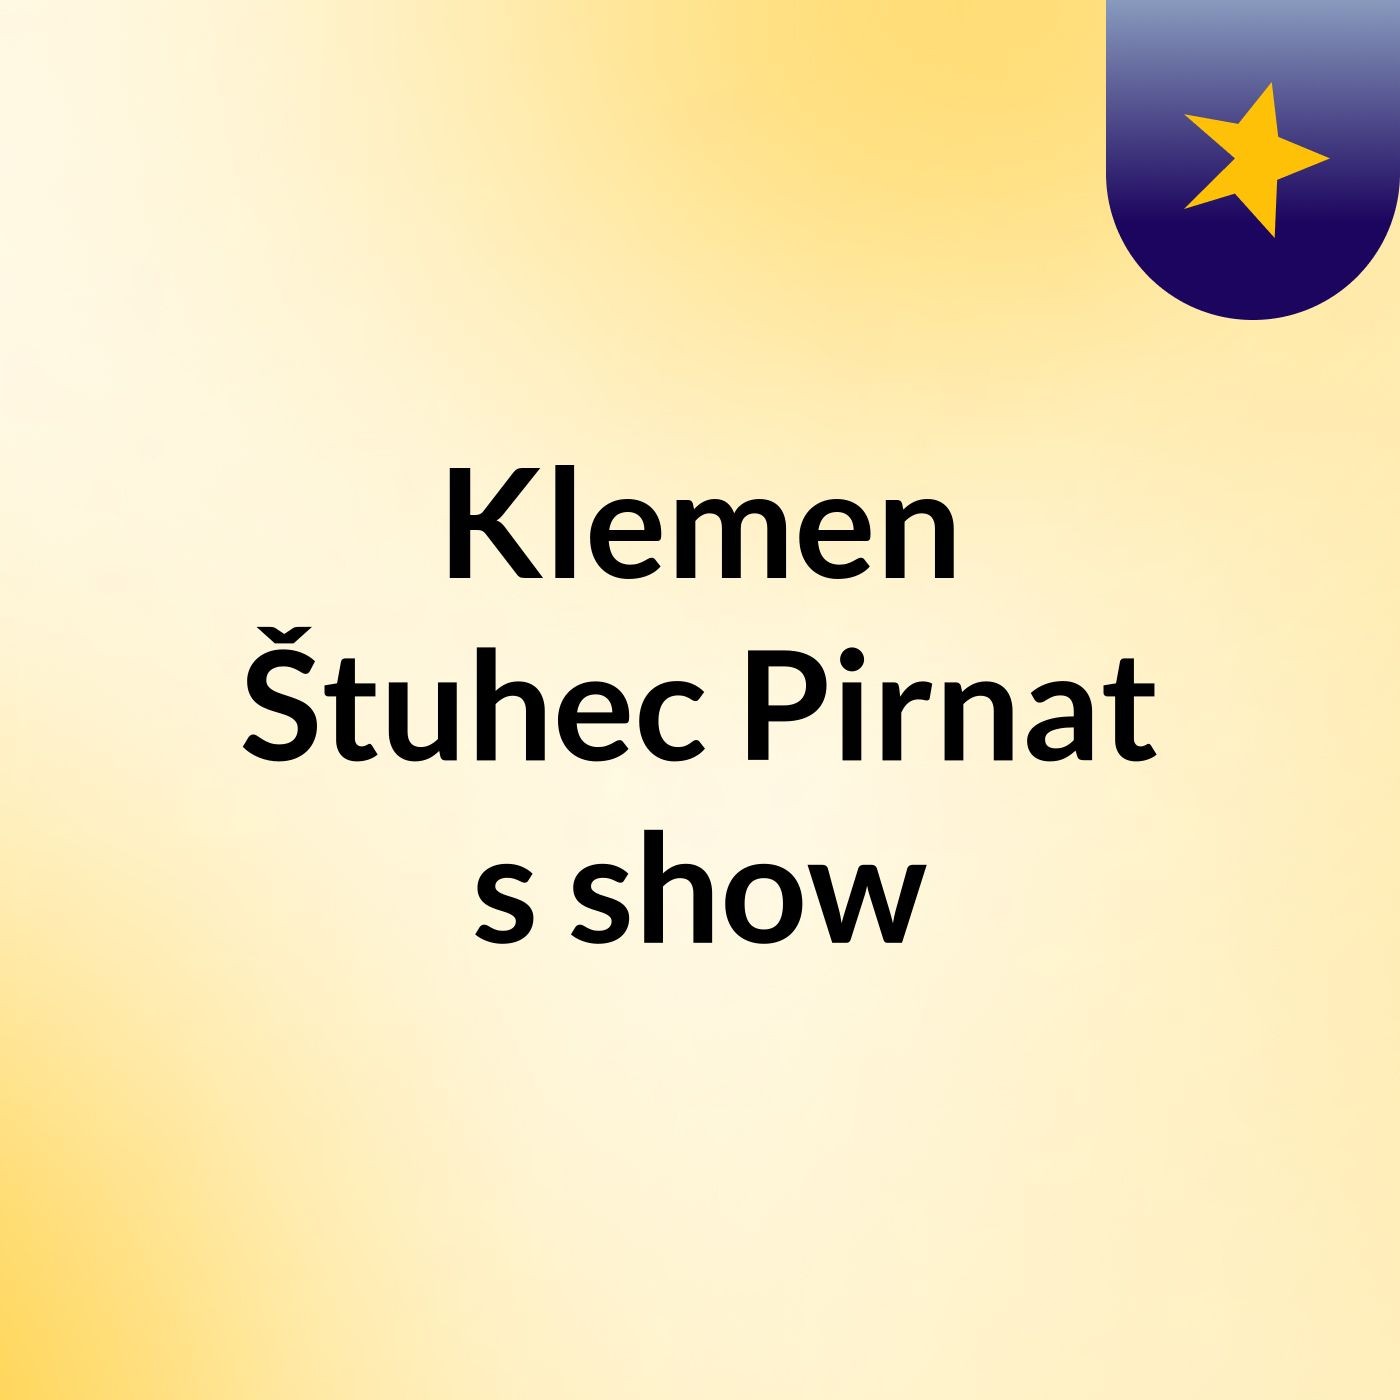 Klemen Štuhec Pirnat's show